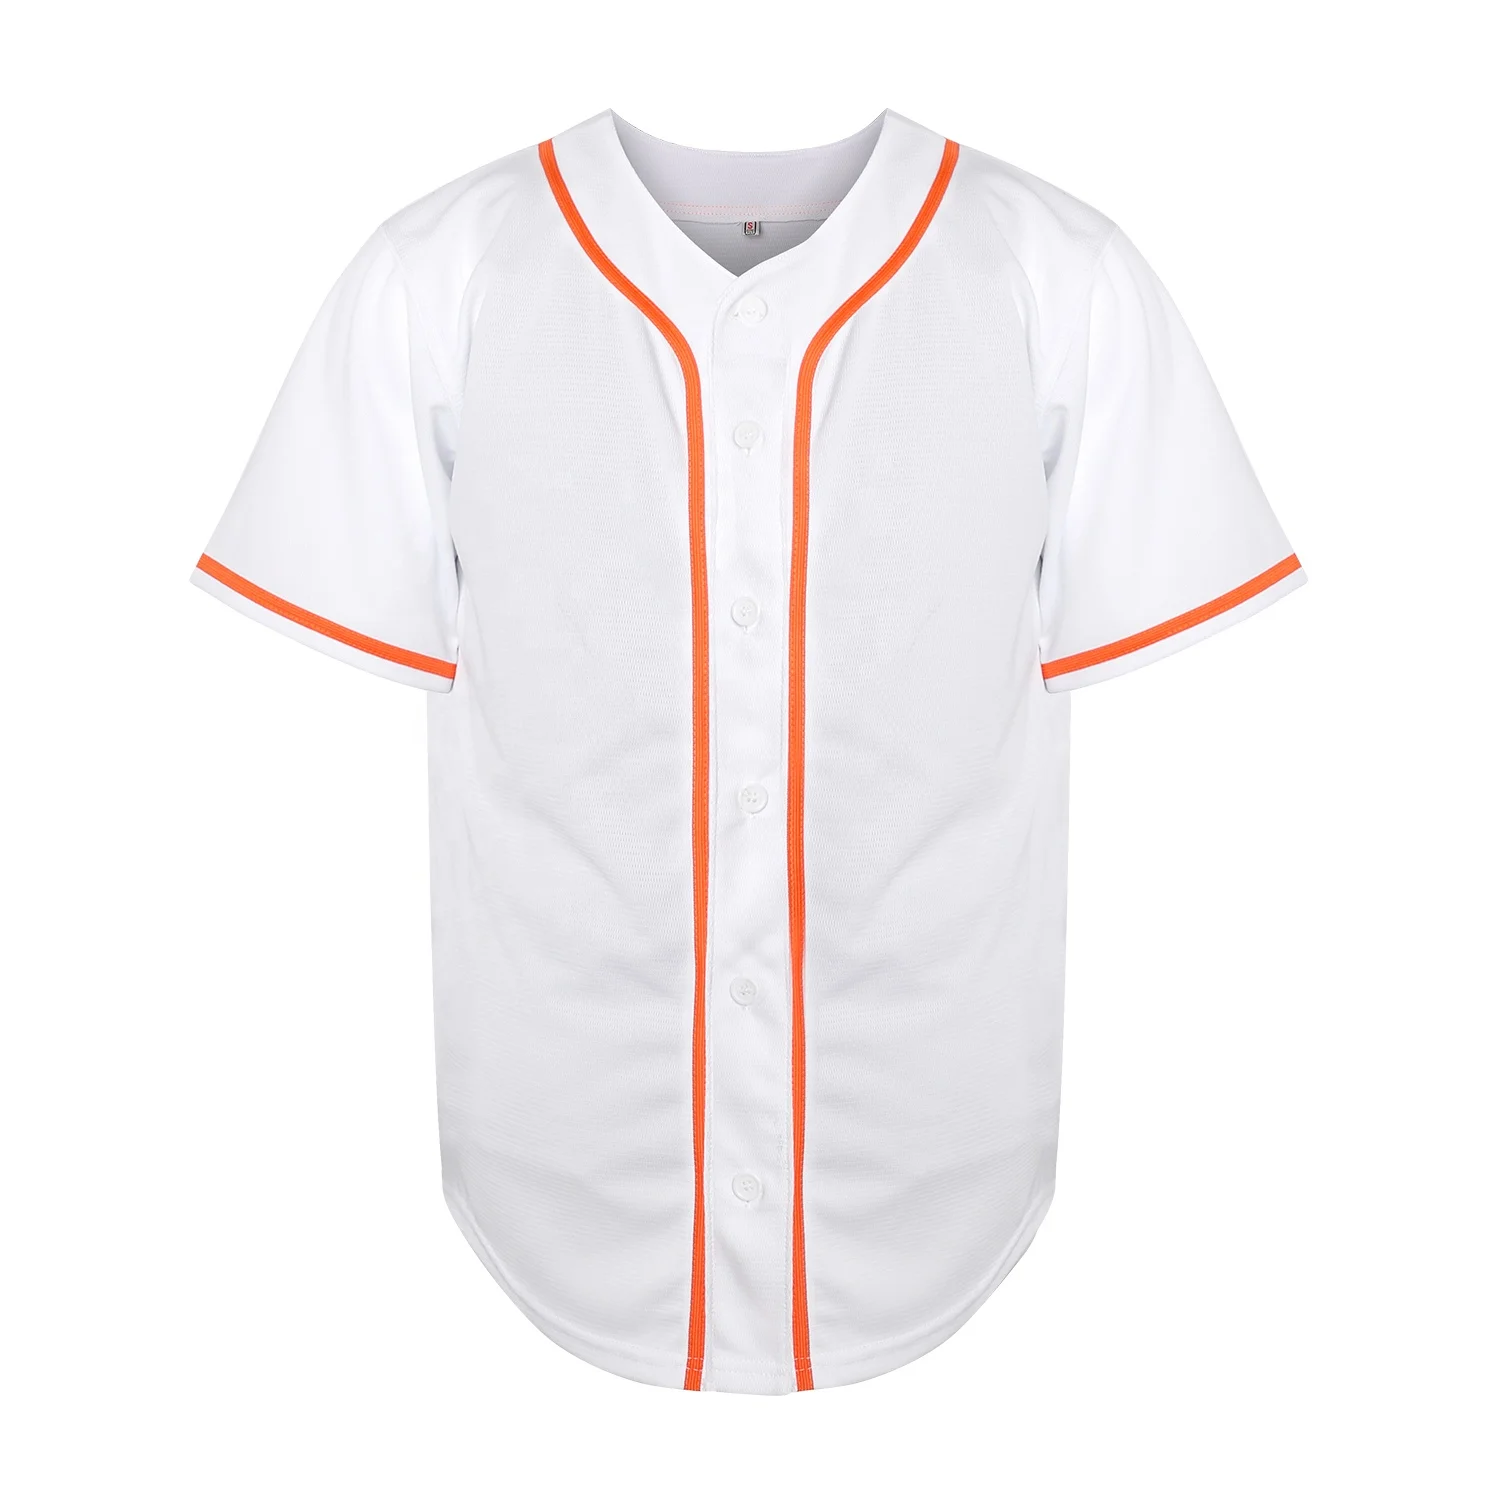 Wholesale Stock Cheap Blank Baseball Jersey Wholesale Embroidery Baseball  Jersey for Sale mens jersey From m.